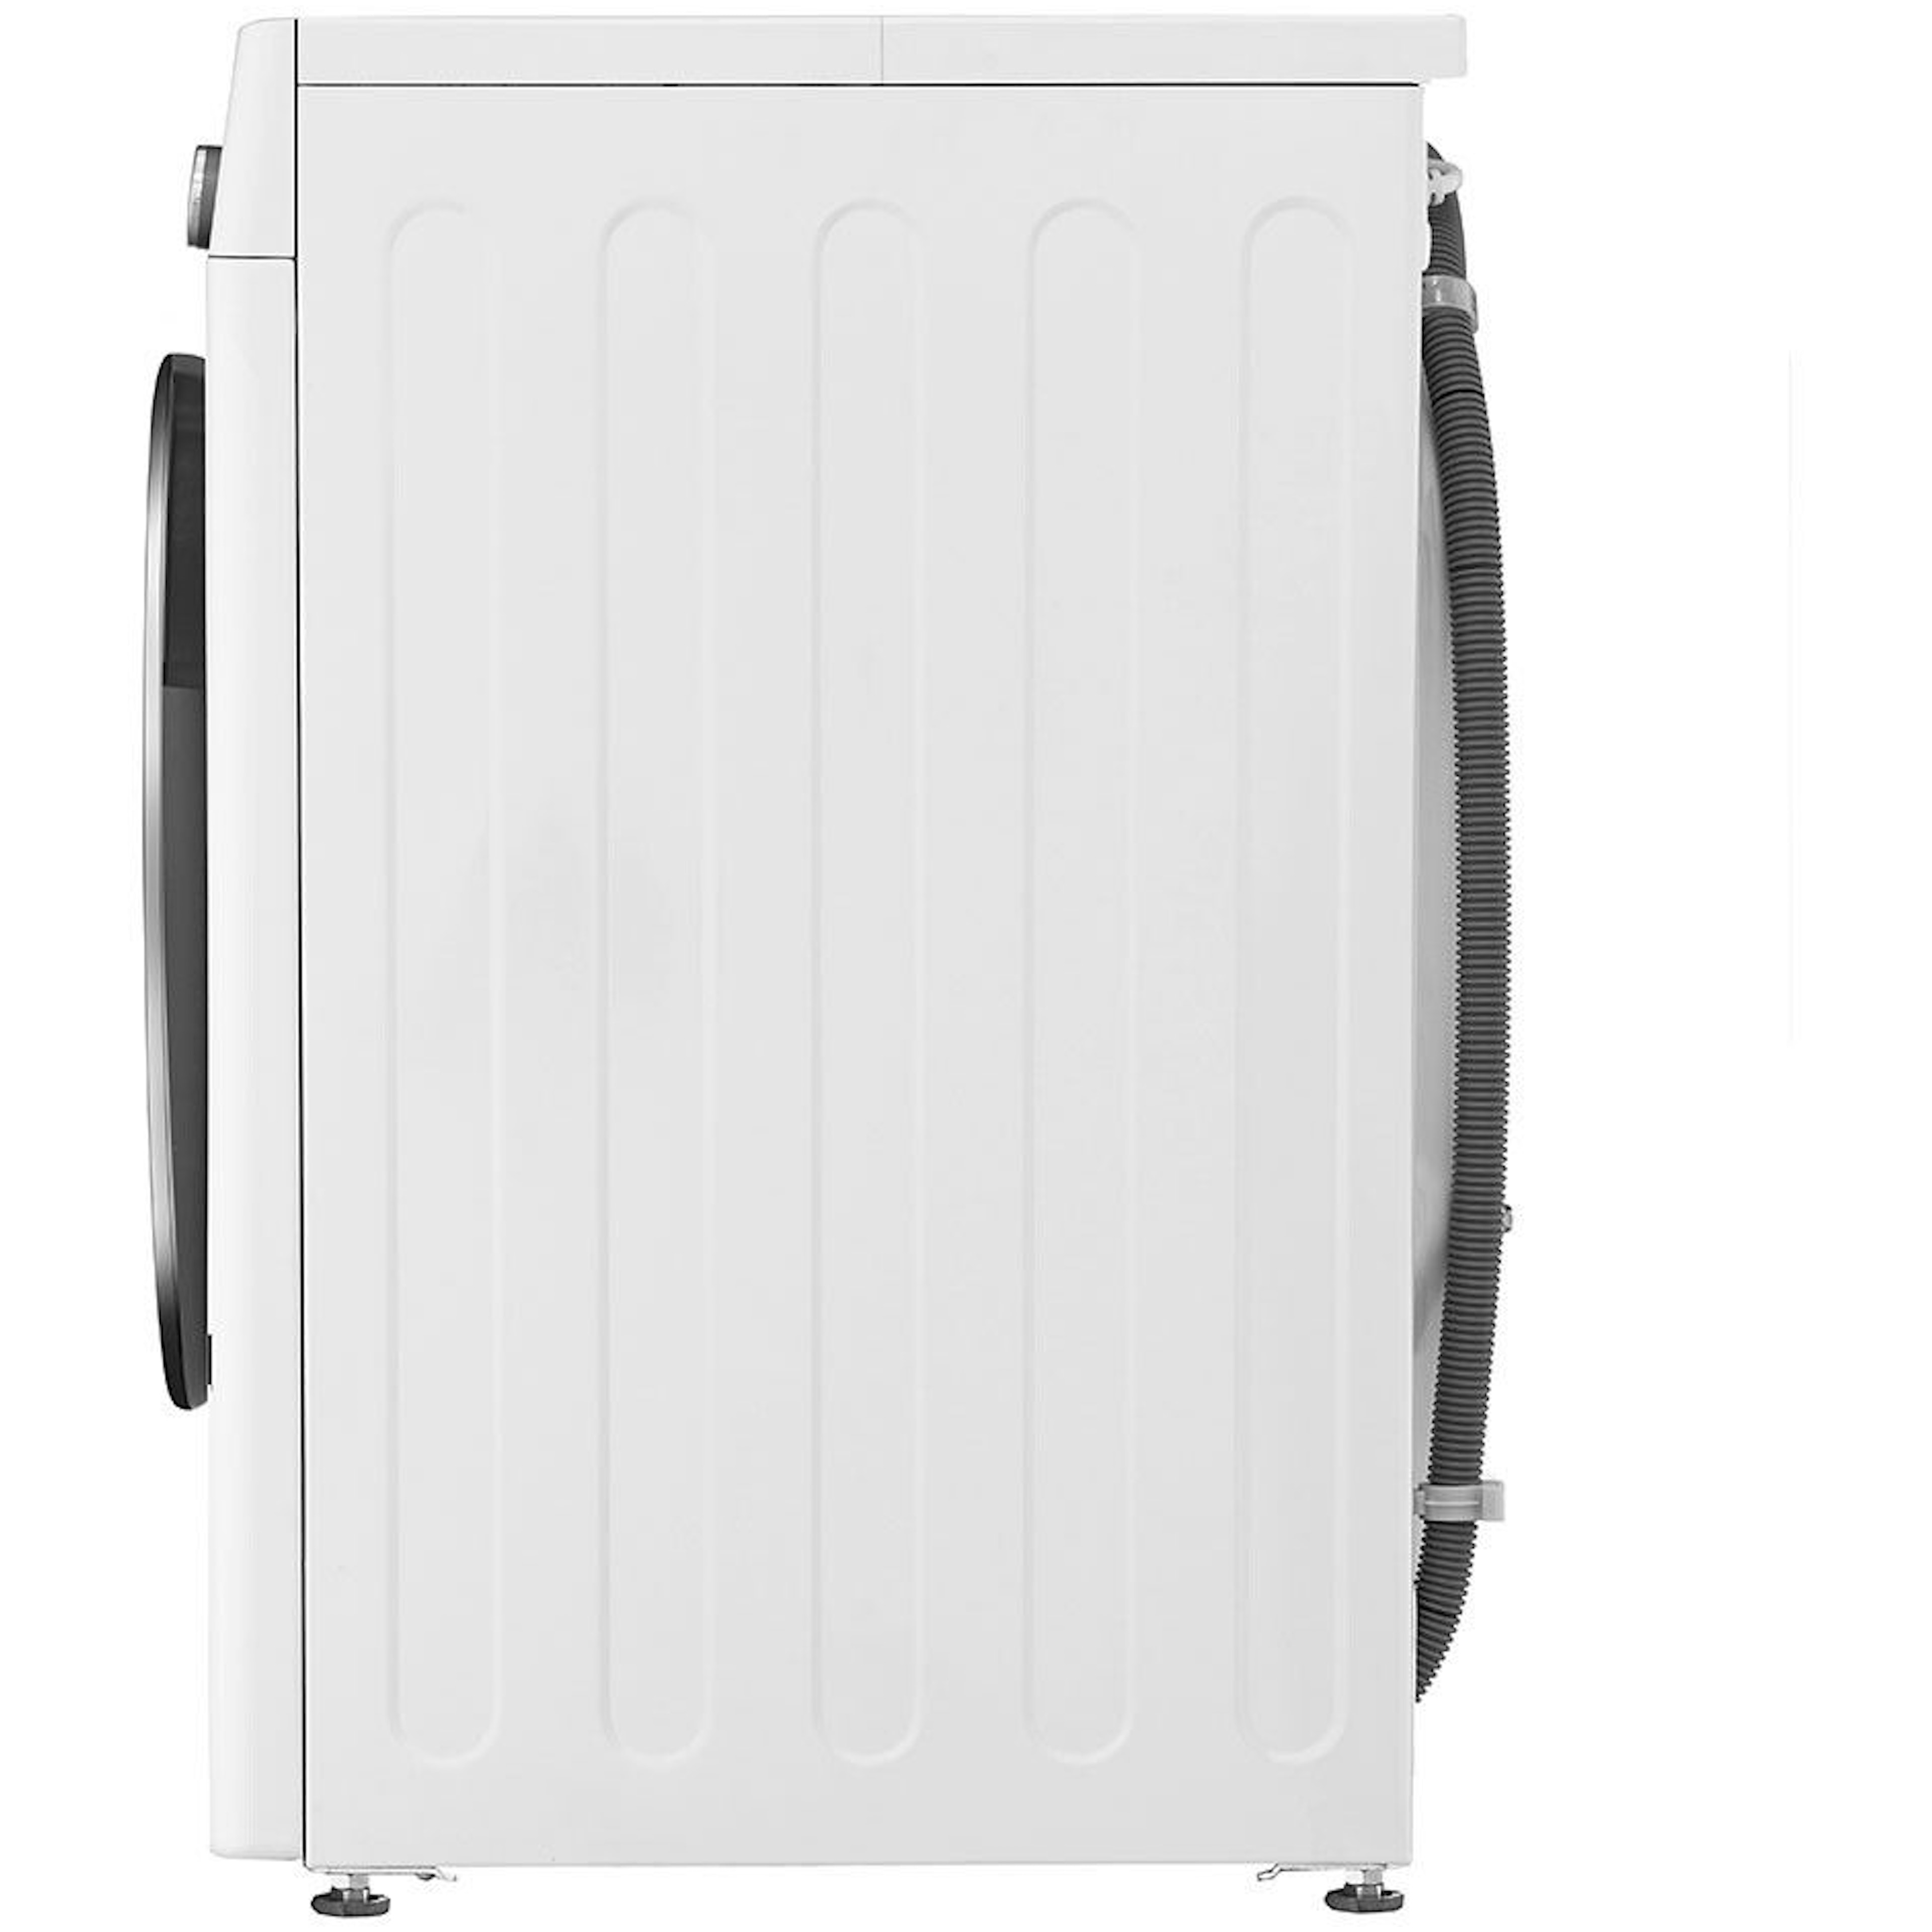 LG wasmachine F4WV909P2 afbeelding 3